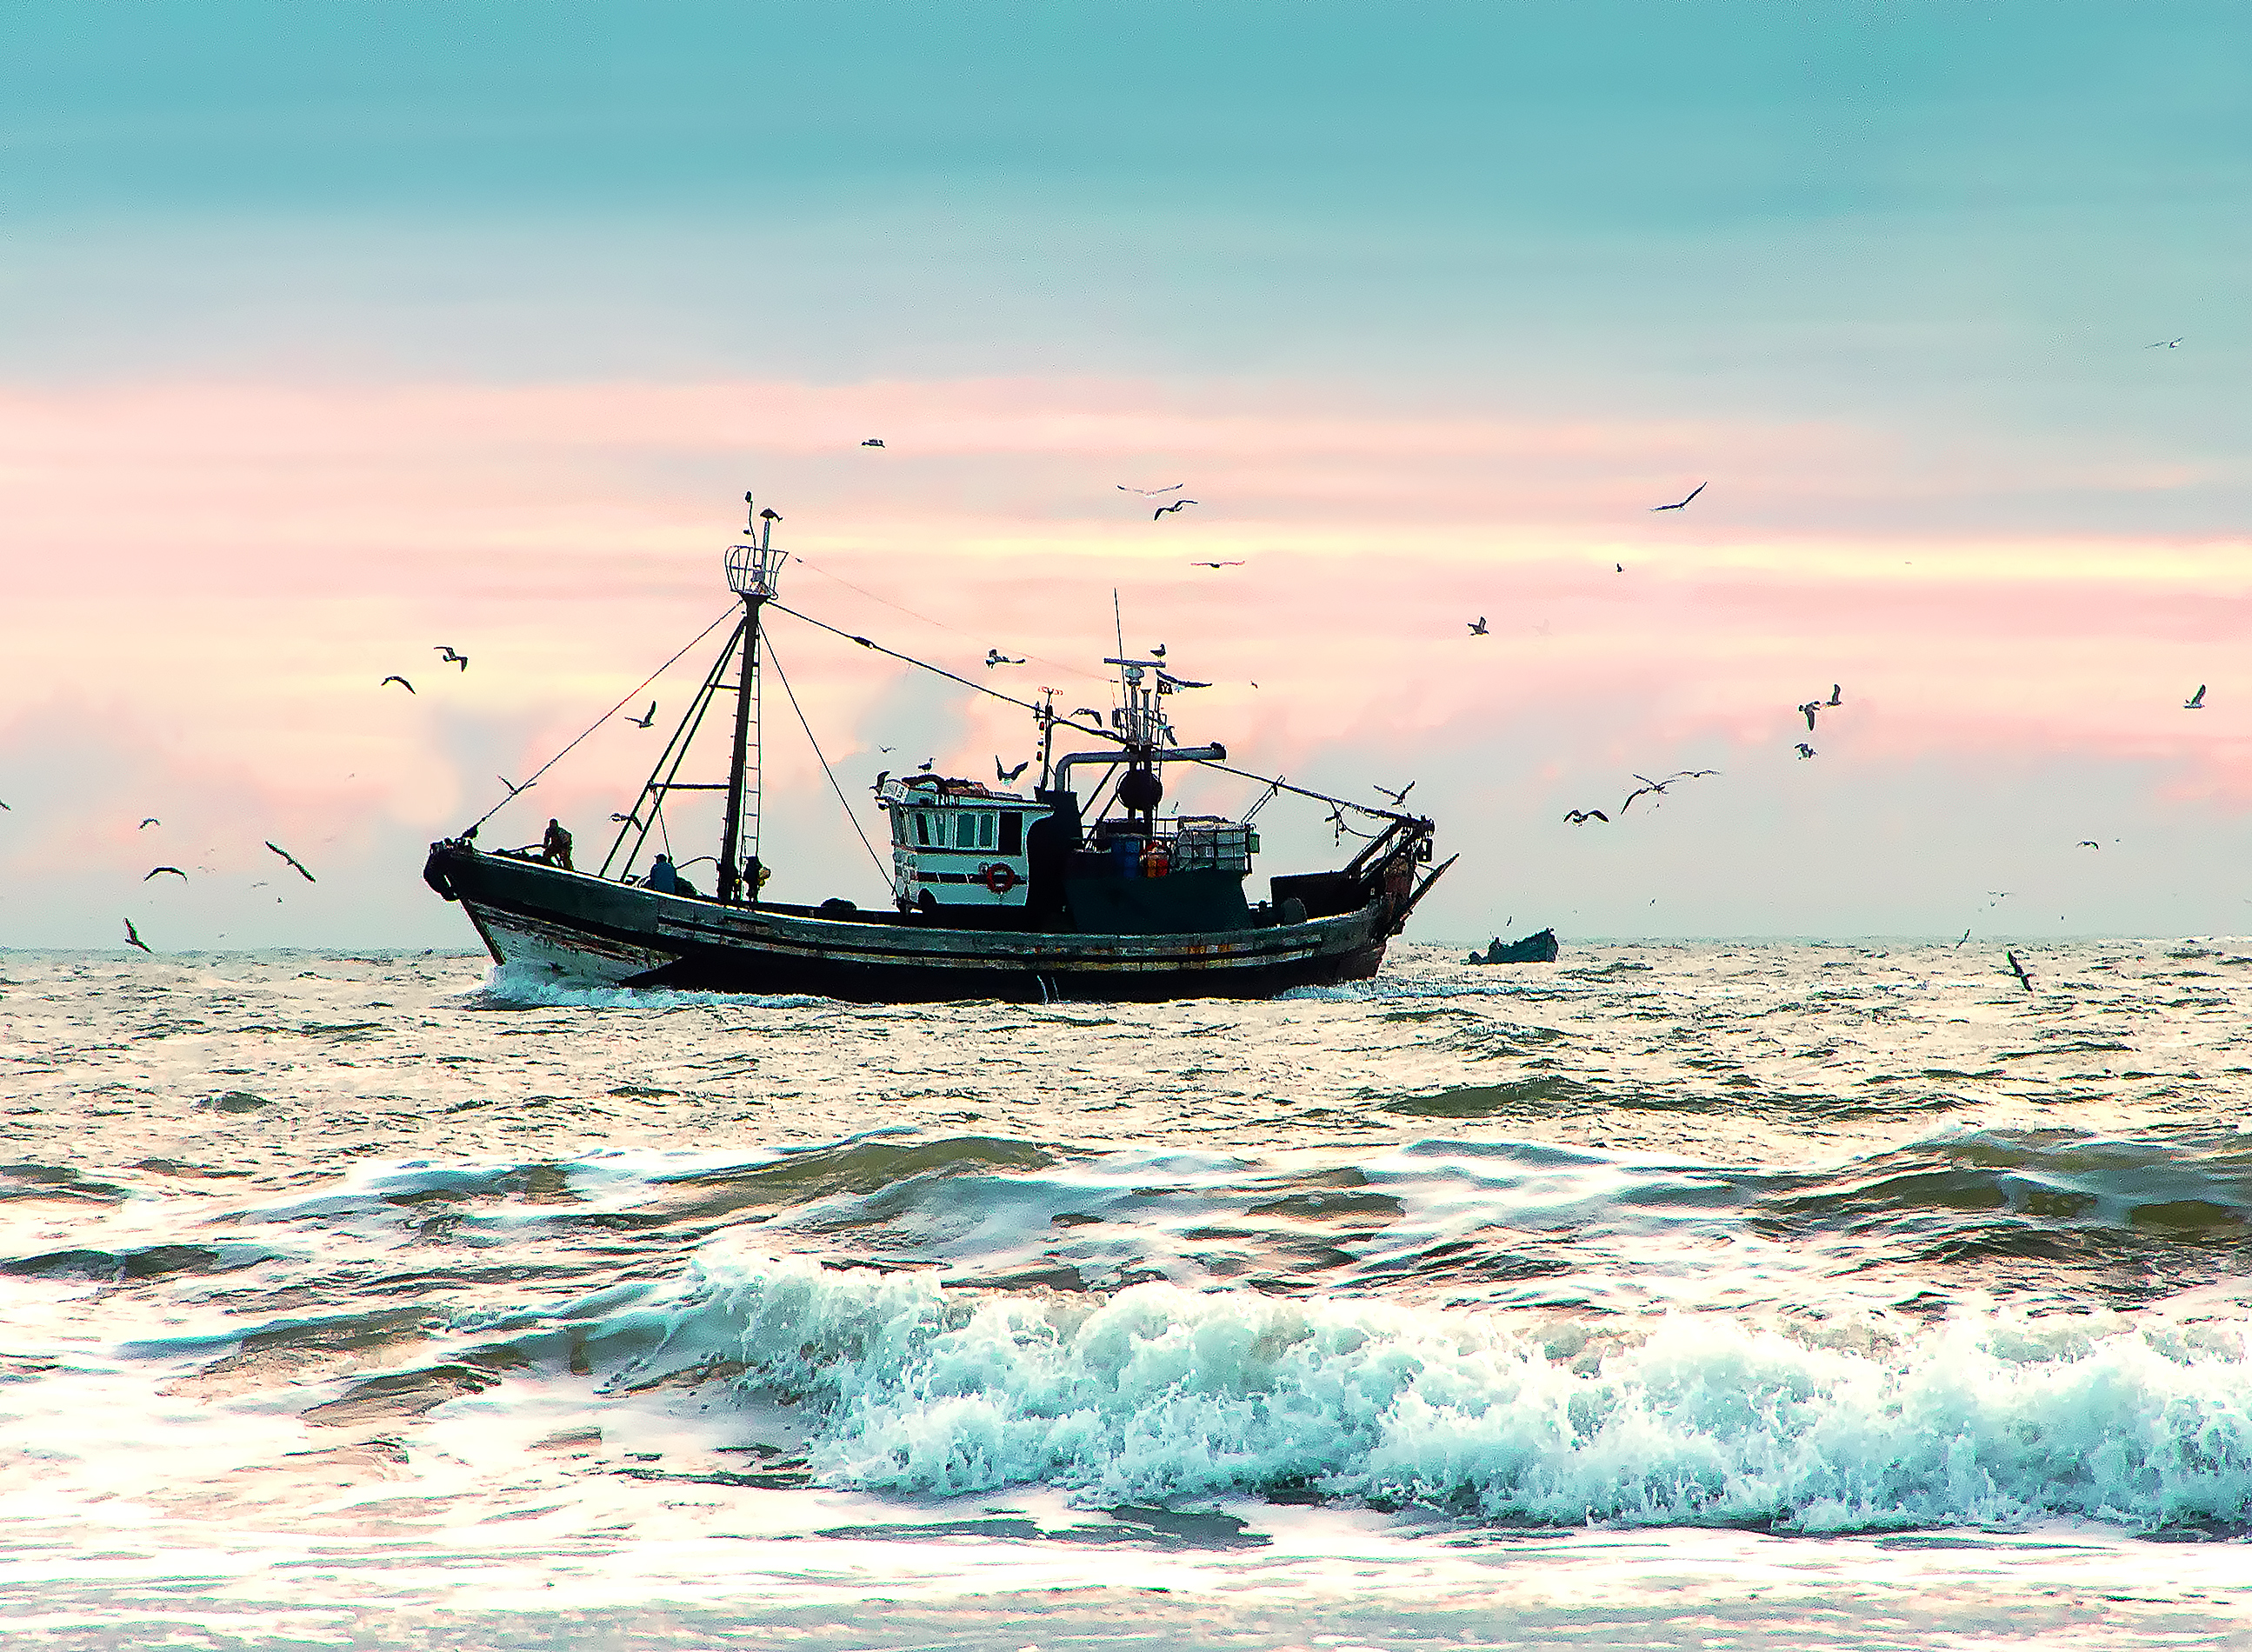 Seagulls following a trawler across the sea.